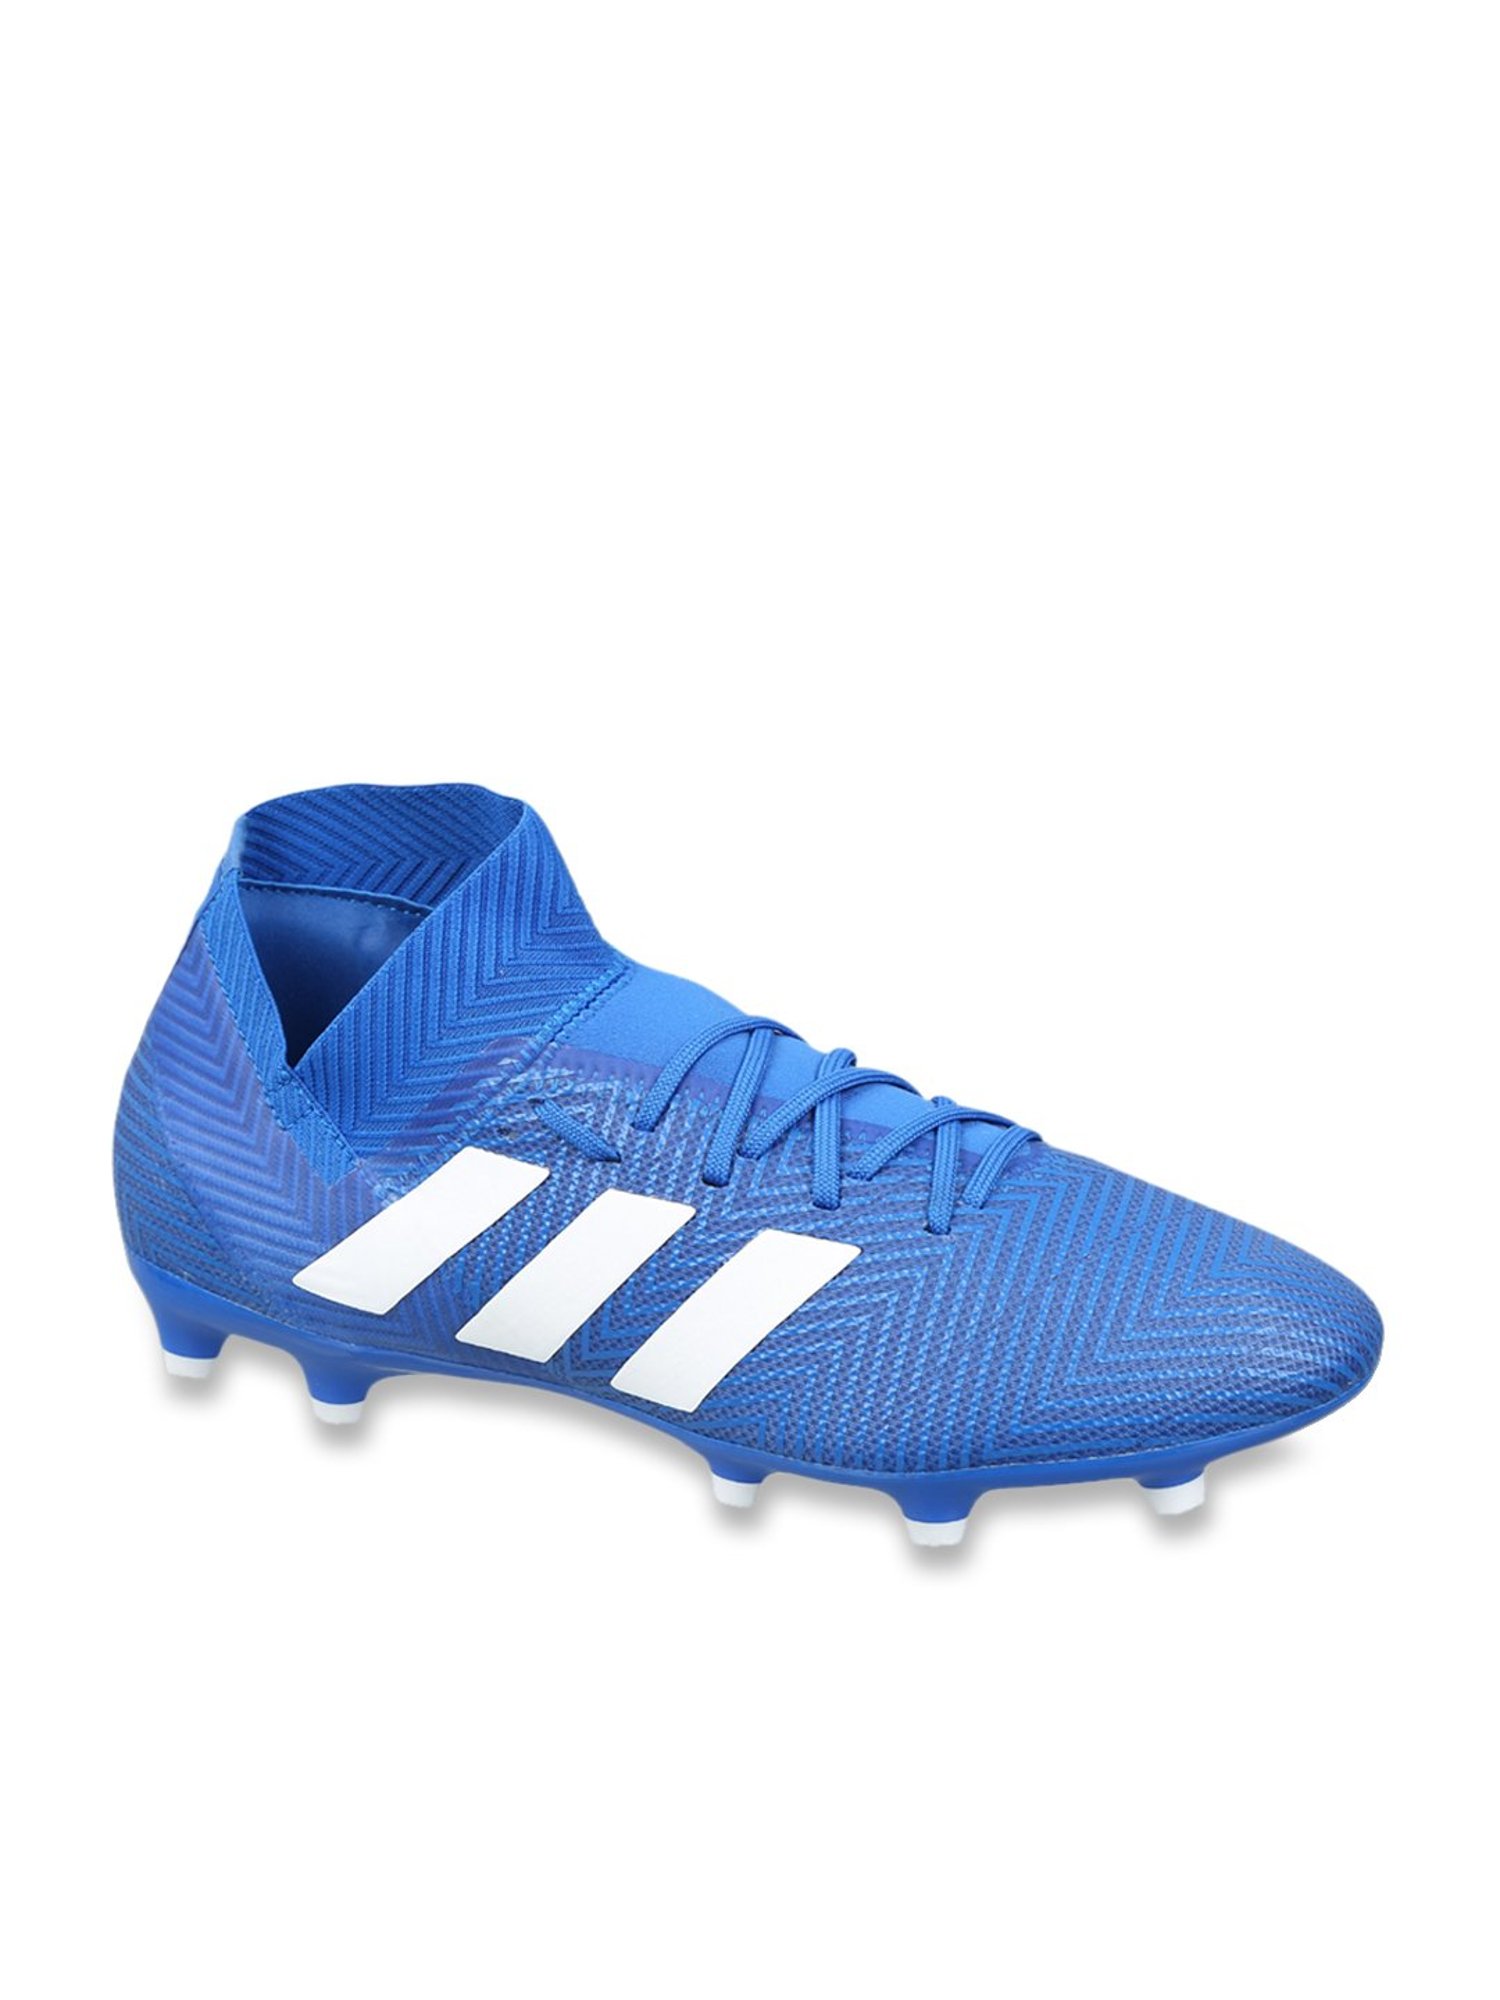 Buy Adidas Nemeziz 18.3 FG Blue Football Shoes for Men at Best Price Tata CLiQ